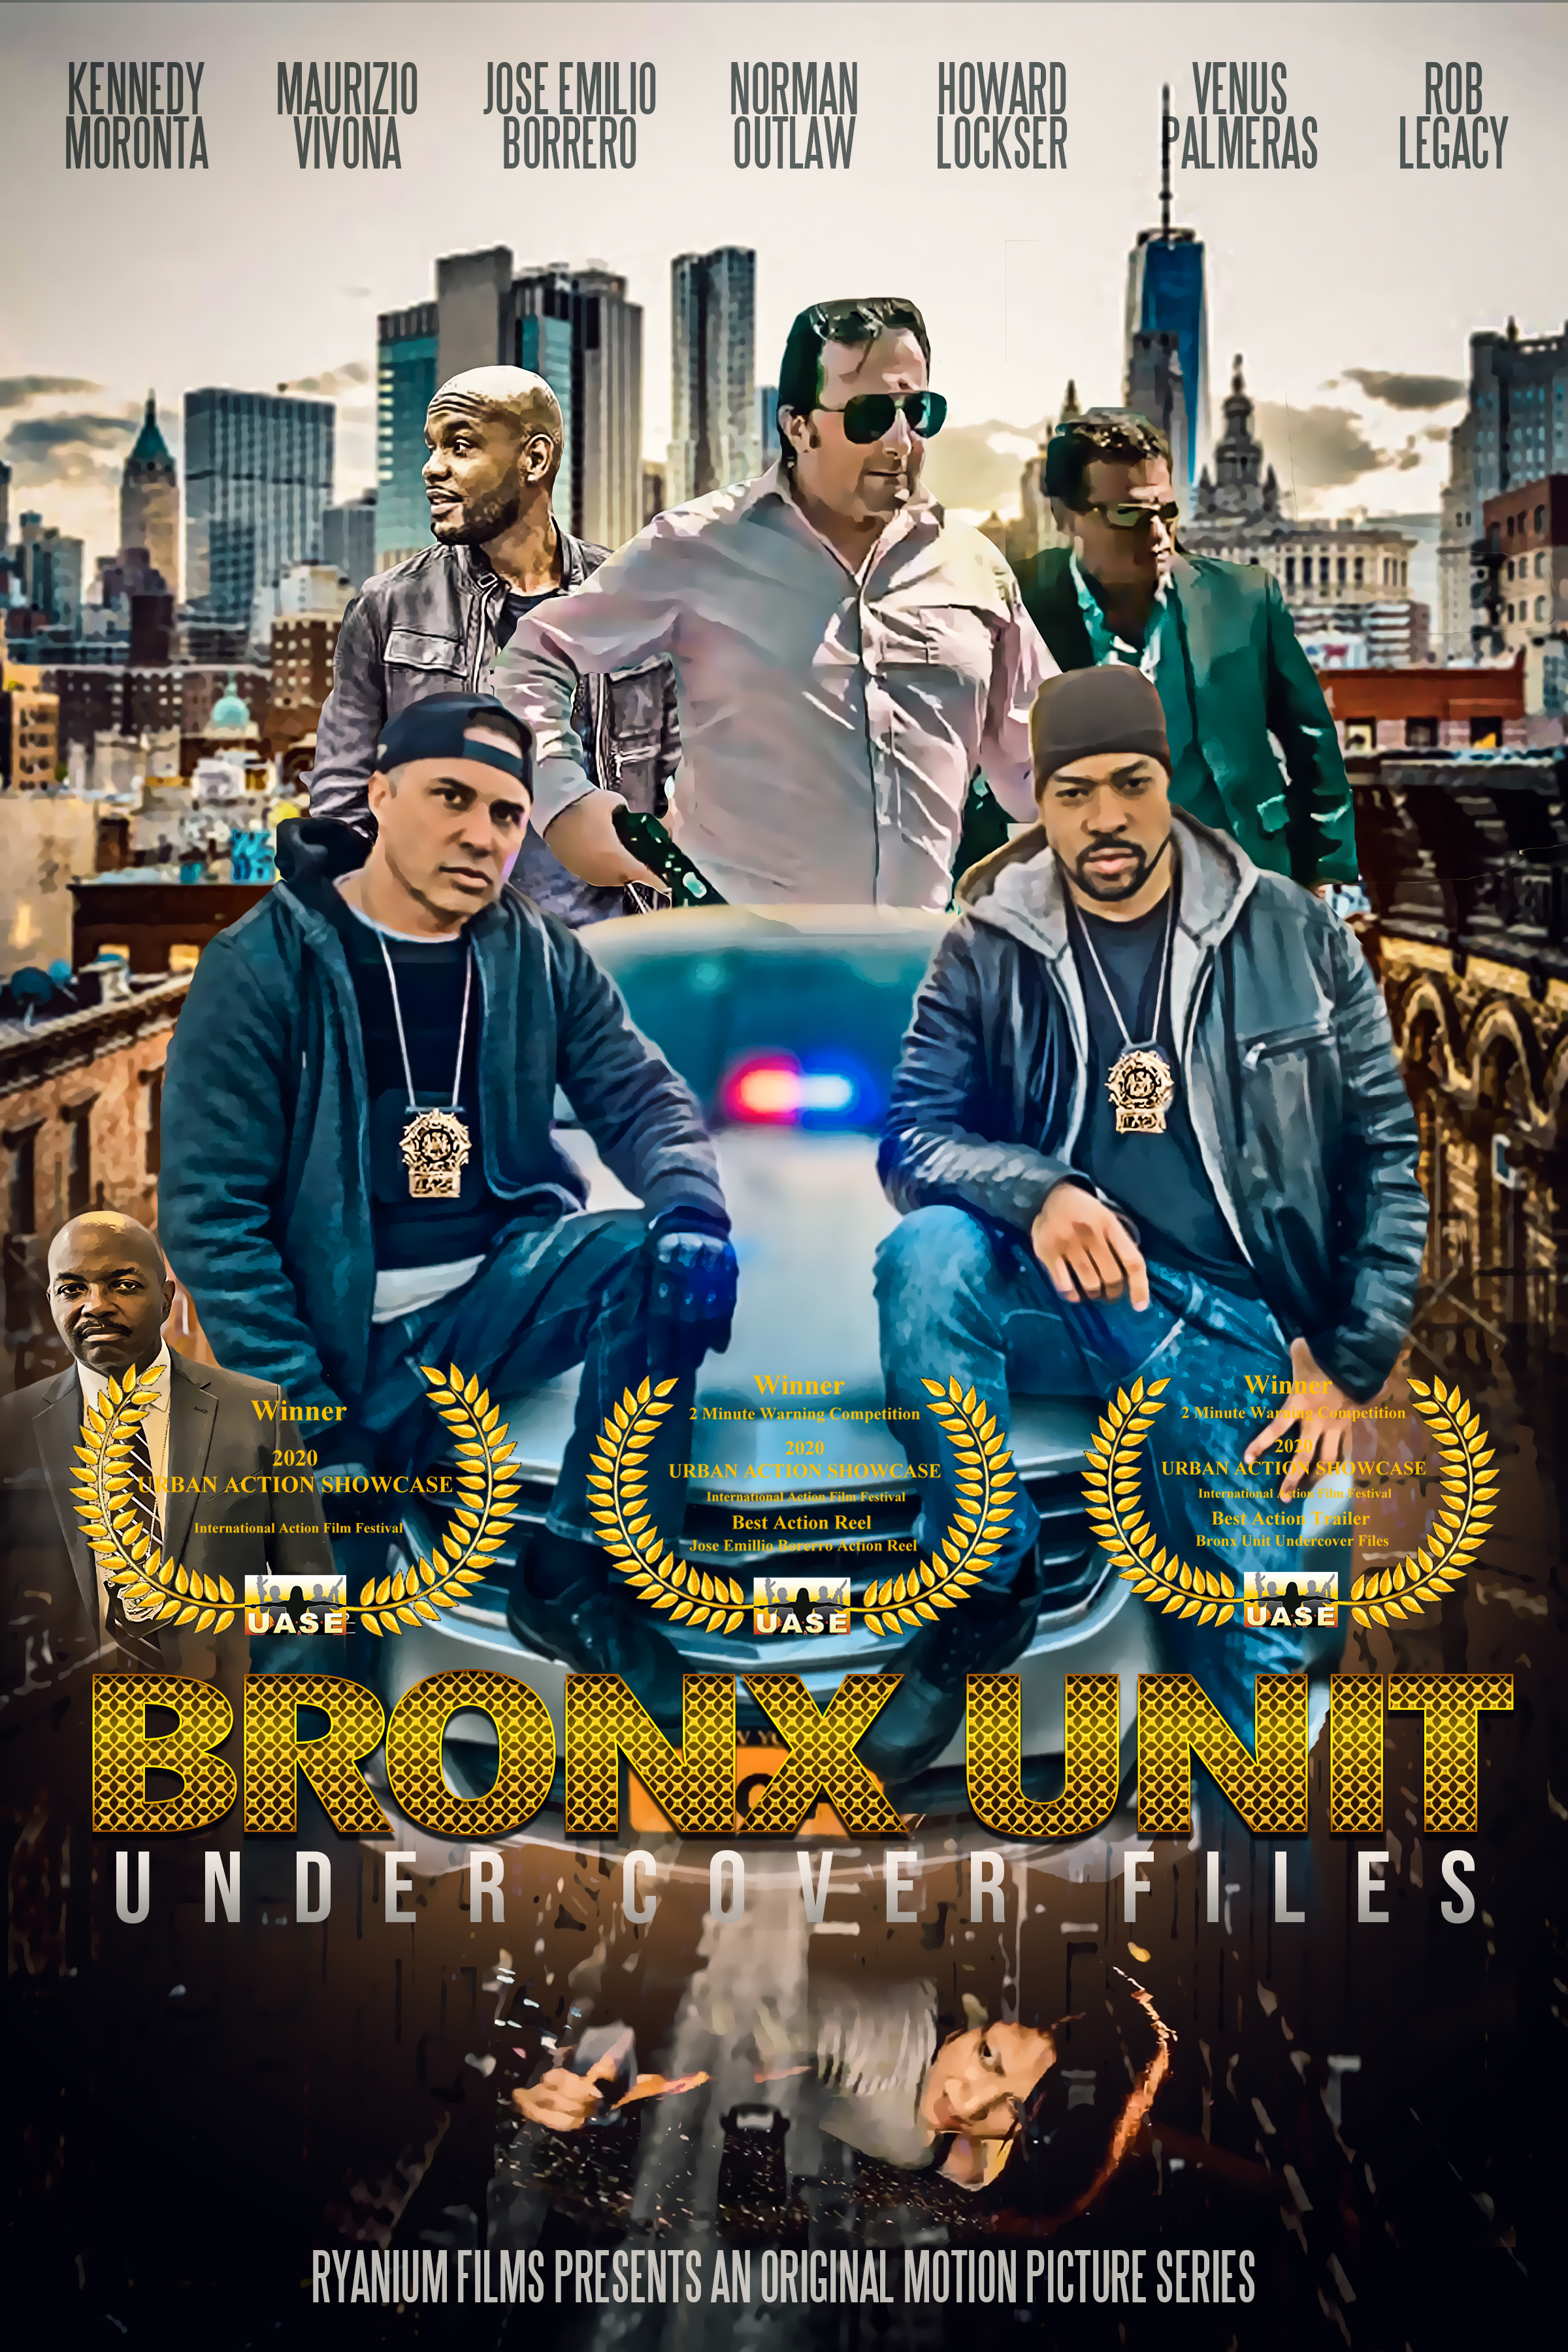 Bronx Unit: Undercover Files (2020)